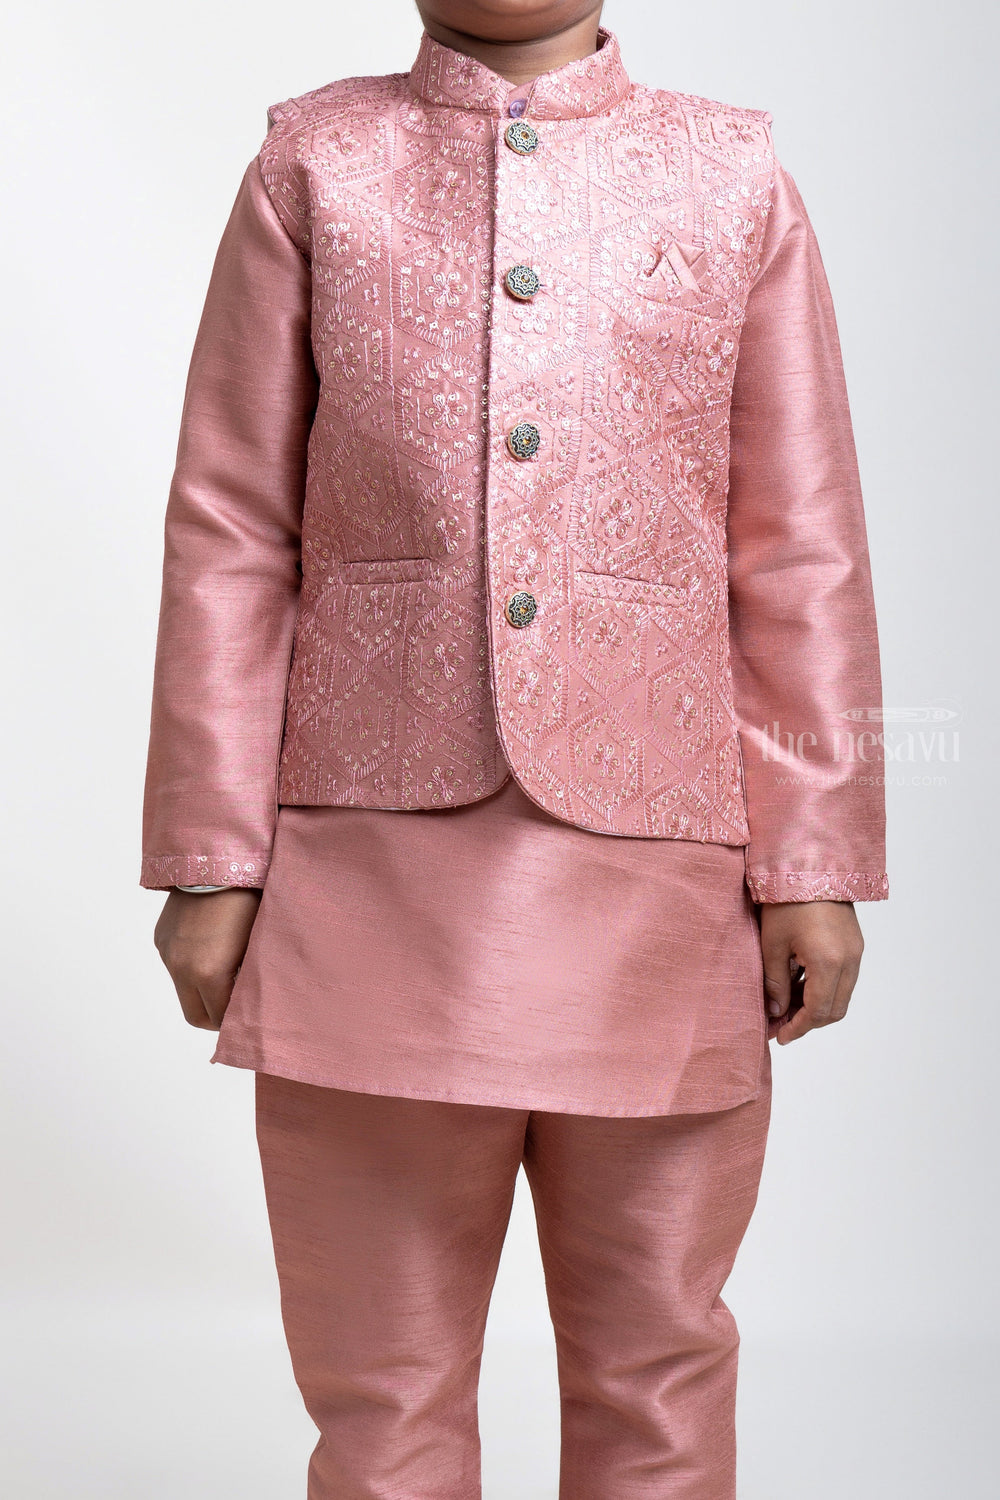 The Nesavu Boys Jacket Sets Posh Brown Kurta Set With Designer Overjacket And Pants For Little Boys psr silks Nesavu